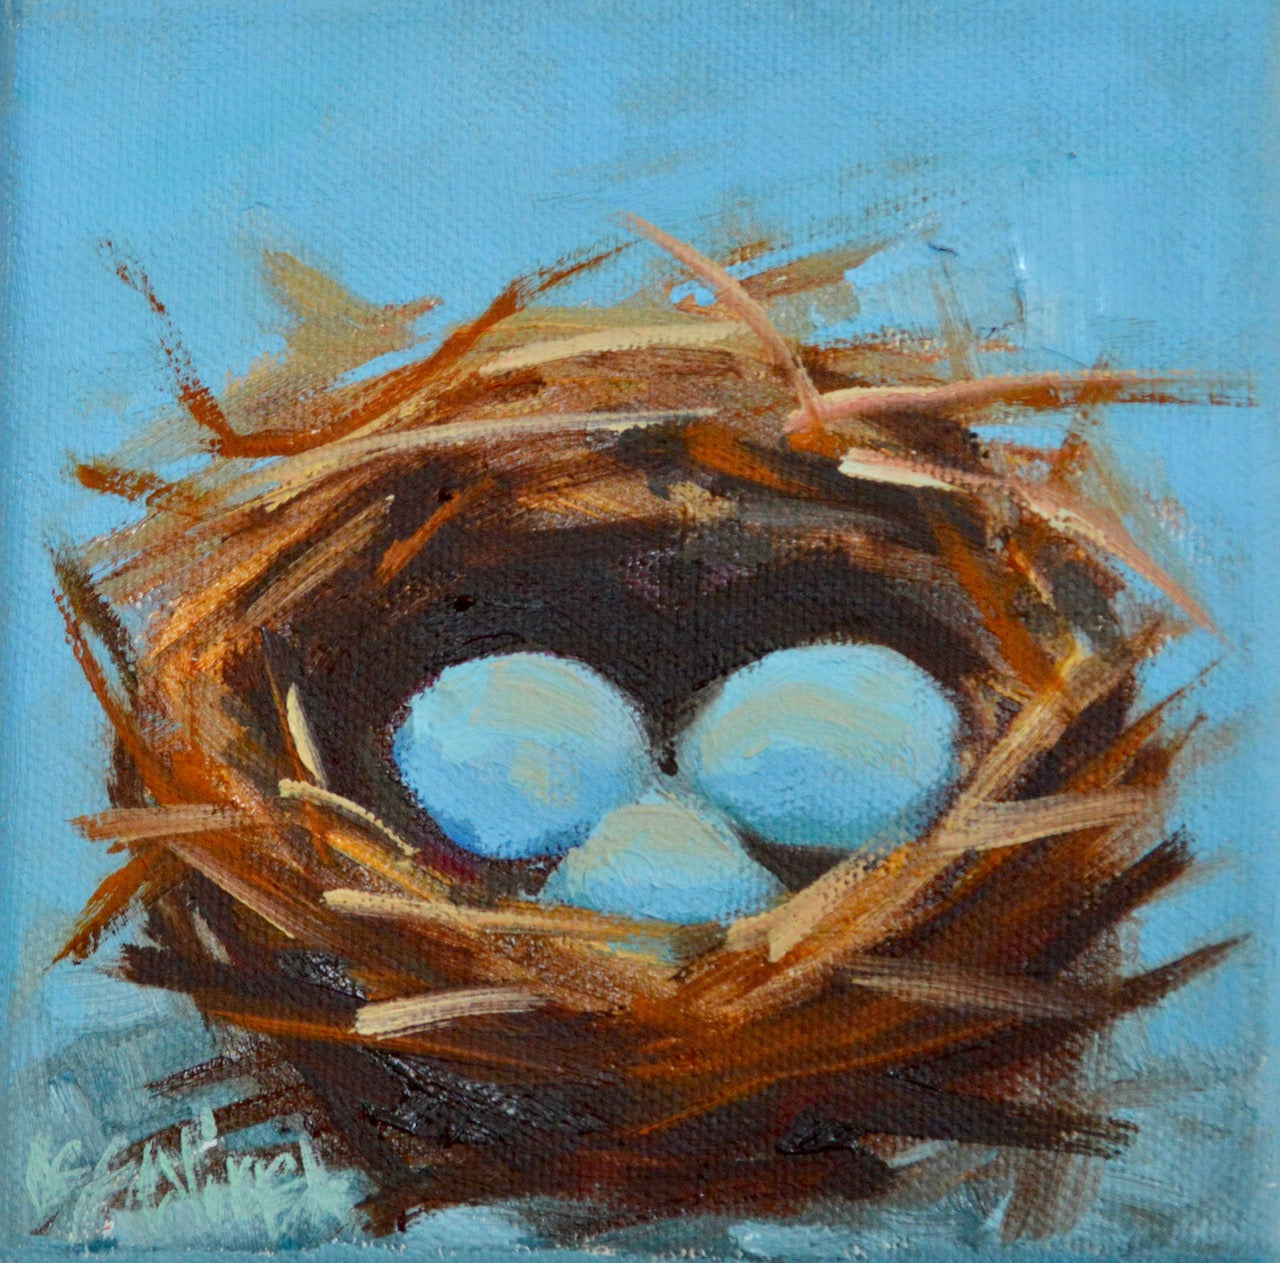 Blue Nest